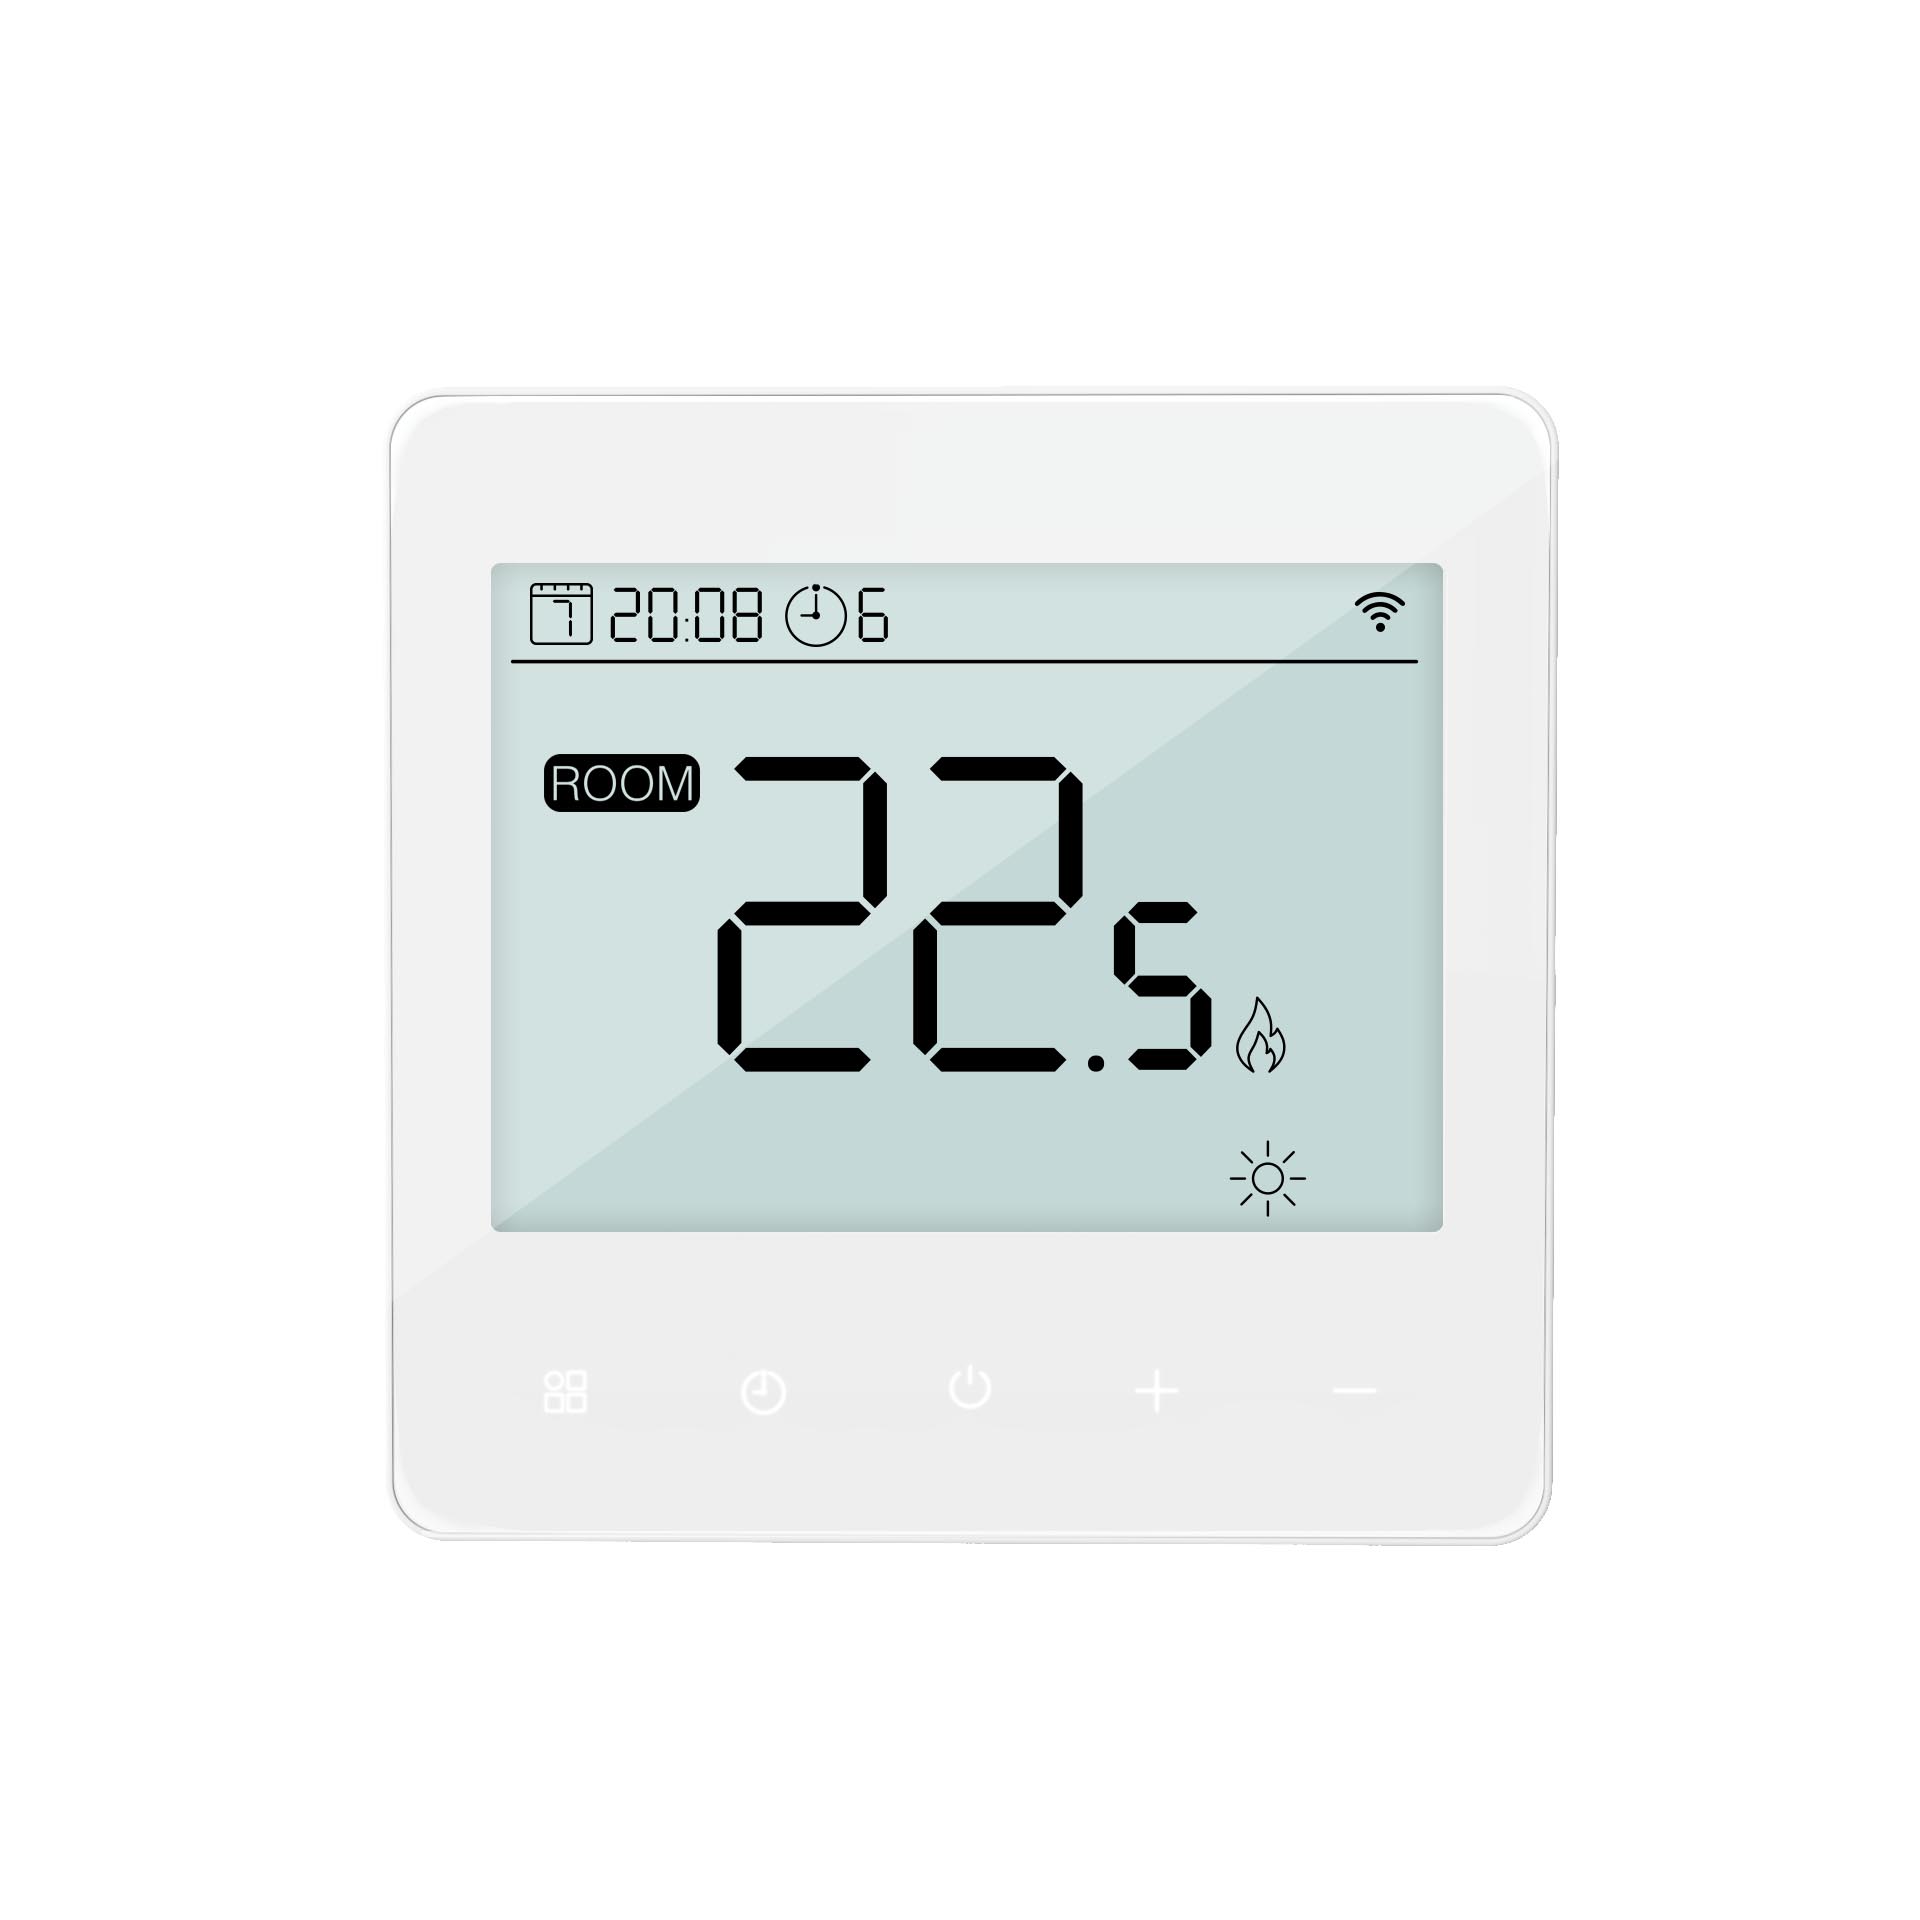 New Programmable Underfloor Heating Smart Thermostat